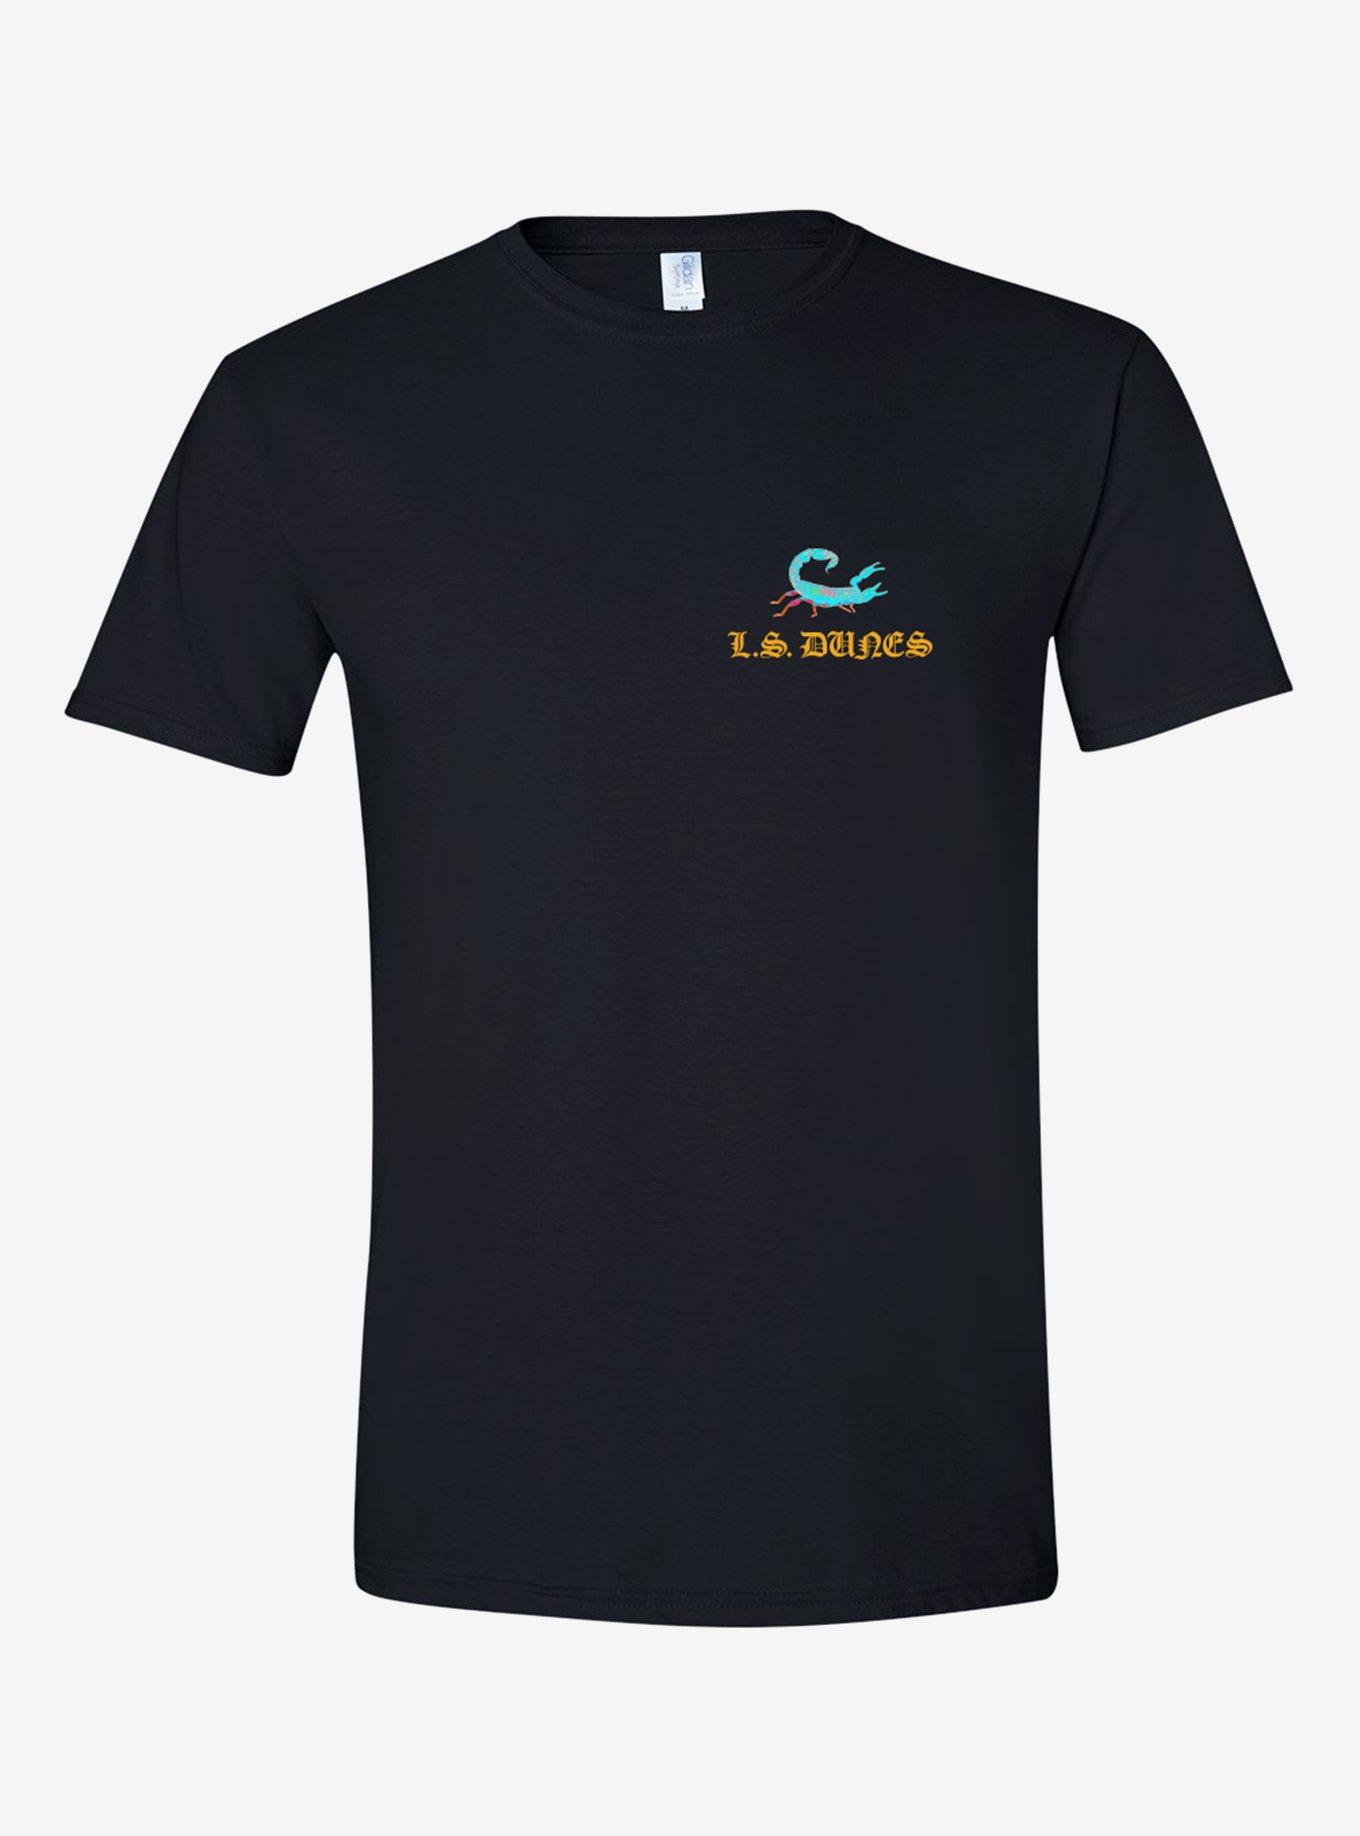 L.S. Dunes Past Lives Scorpion T-Shirt, BLACK, hi-res